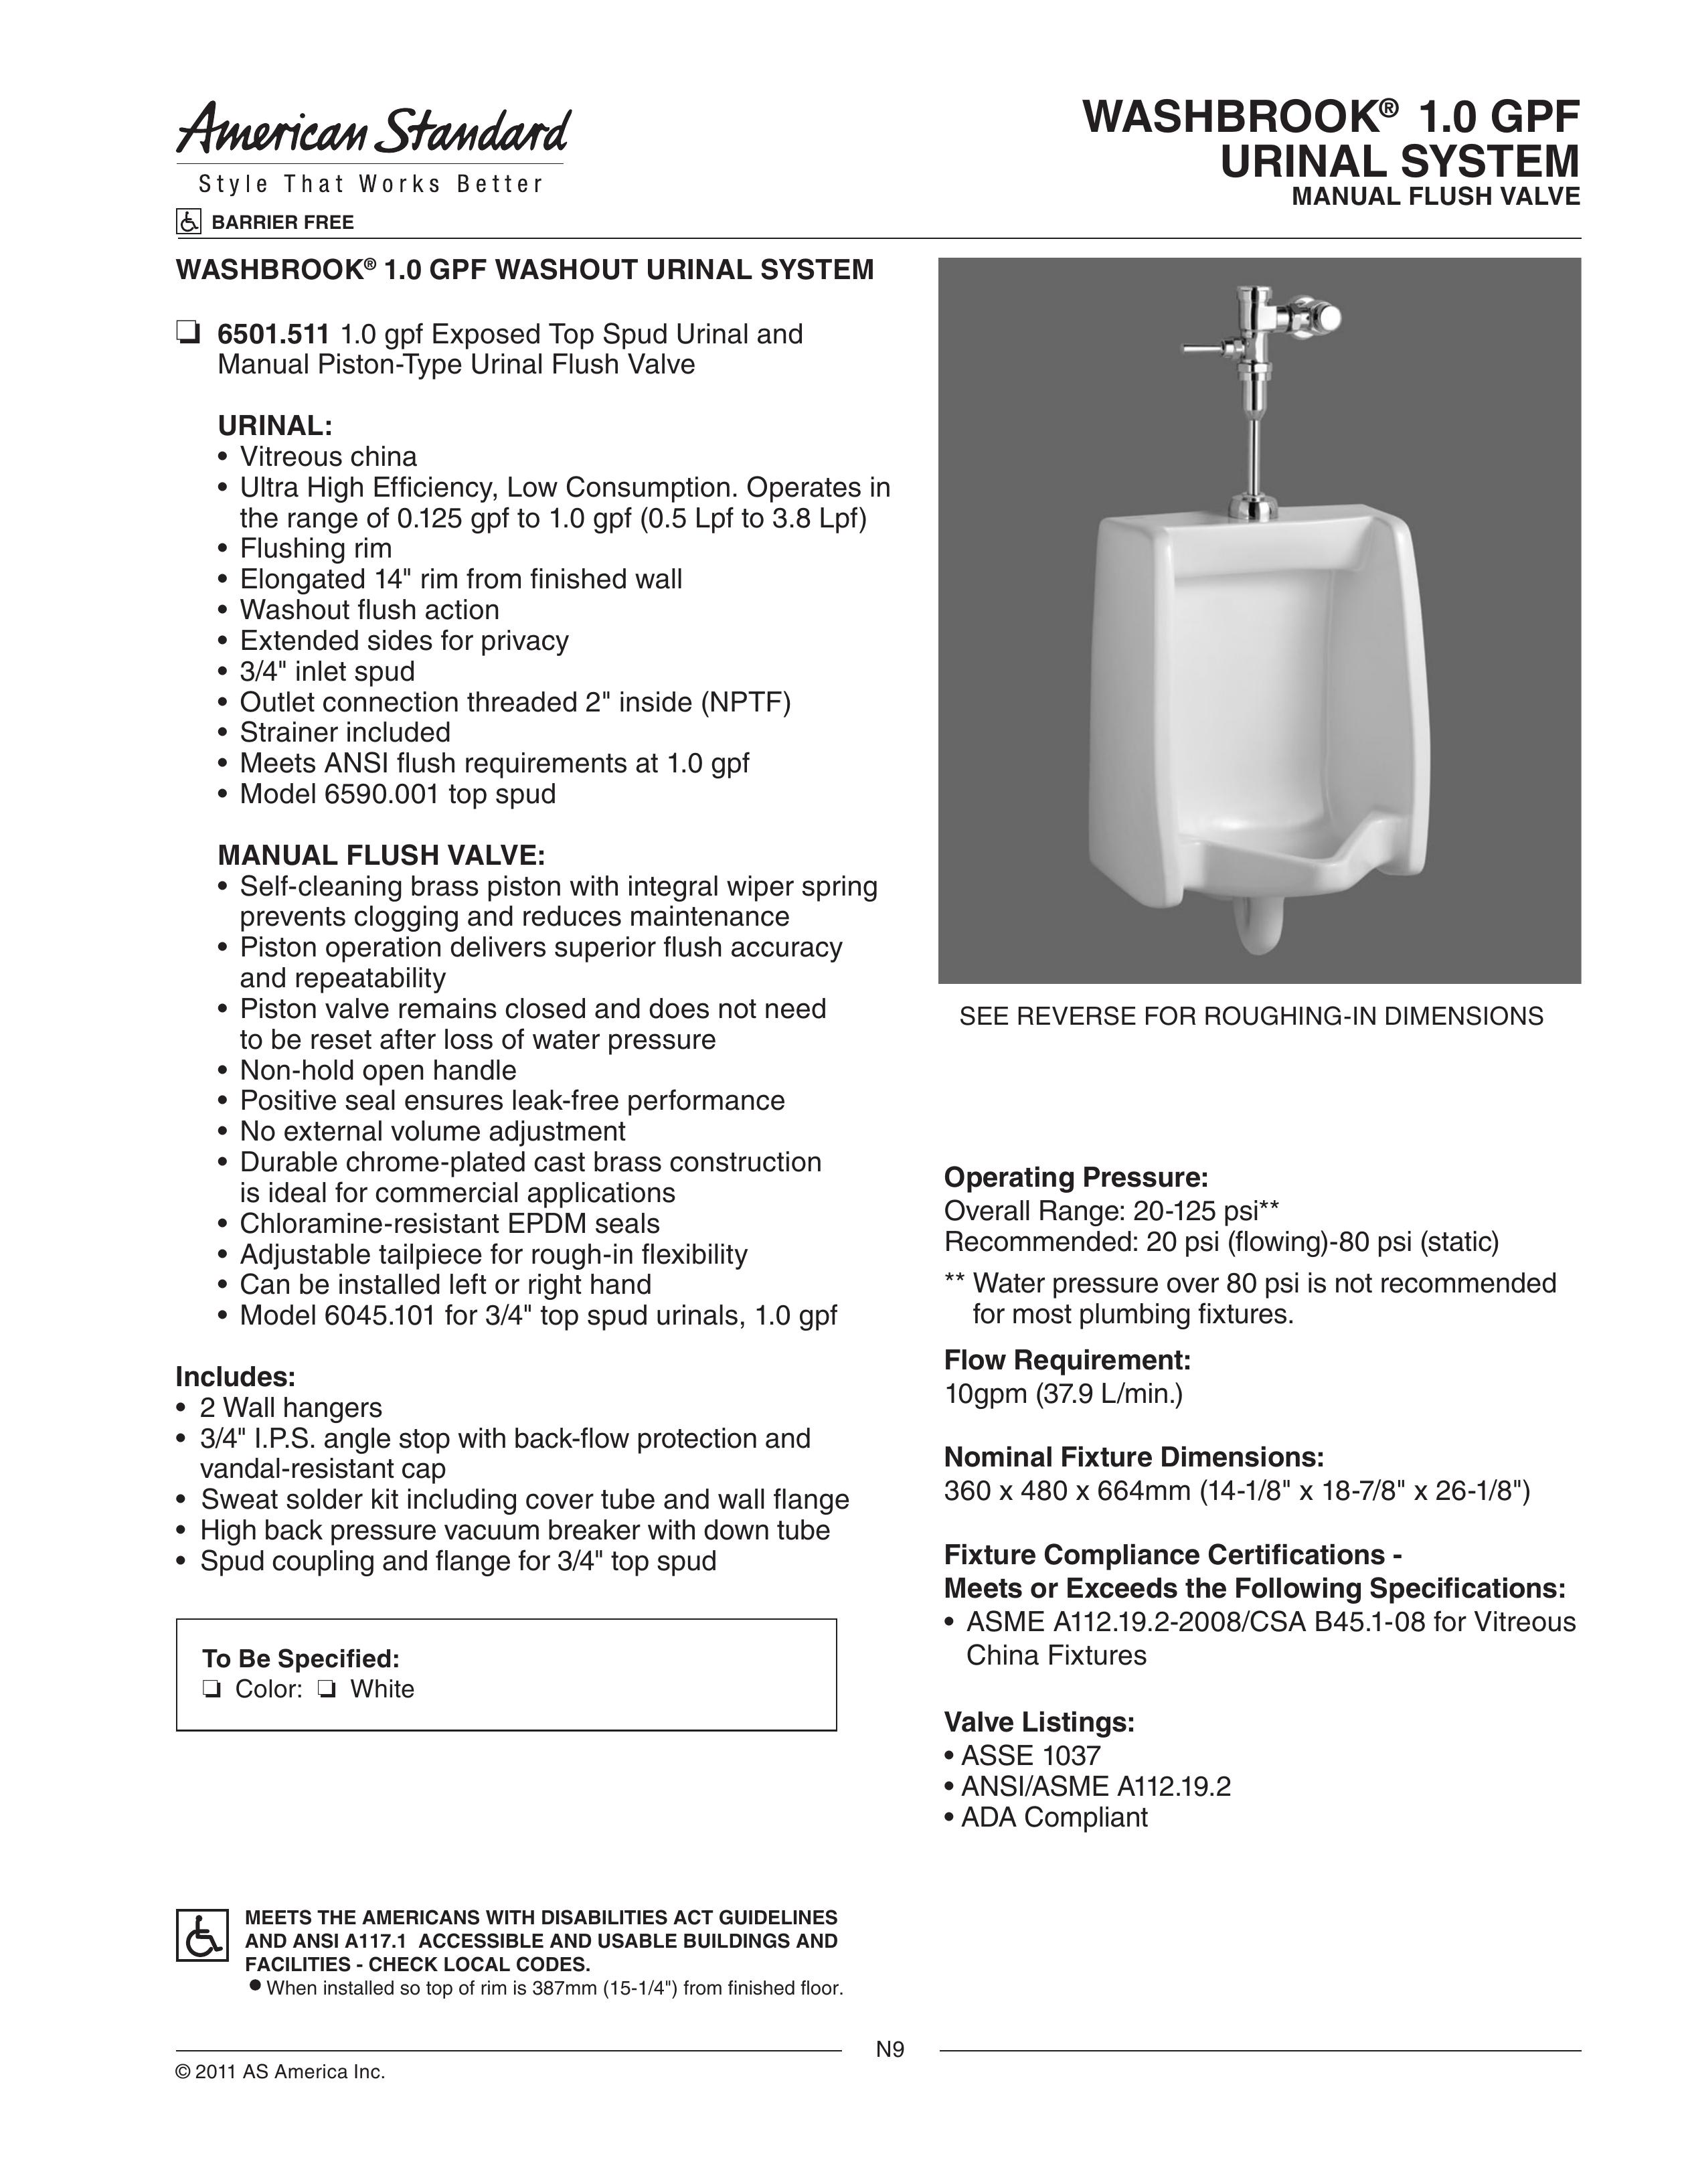 American Standard 1.0 GPF Bathroom Aids User Manual